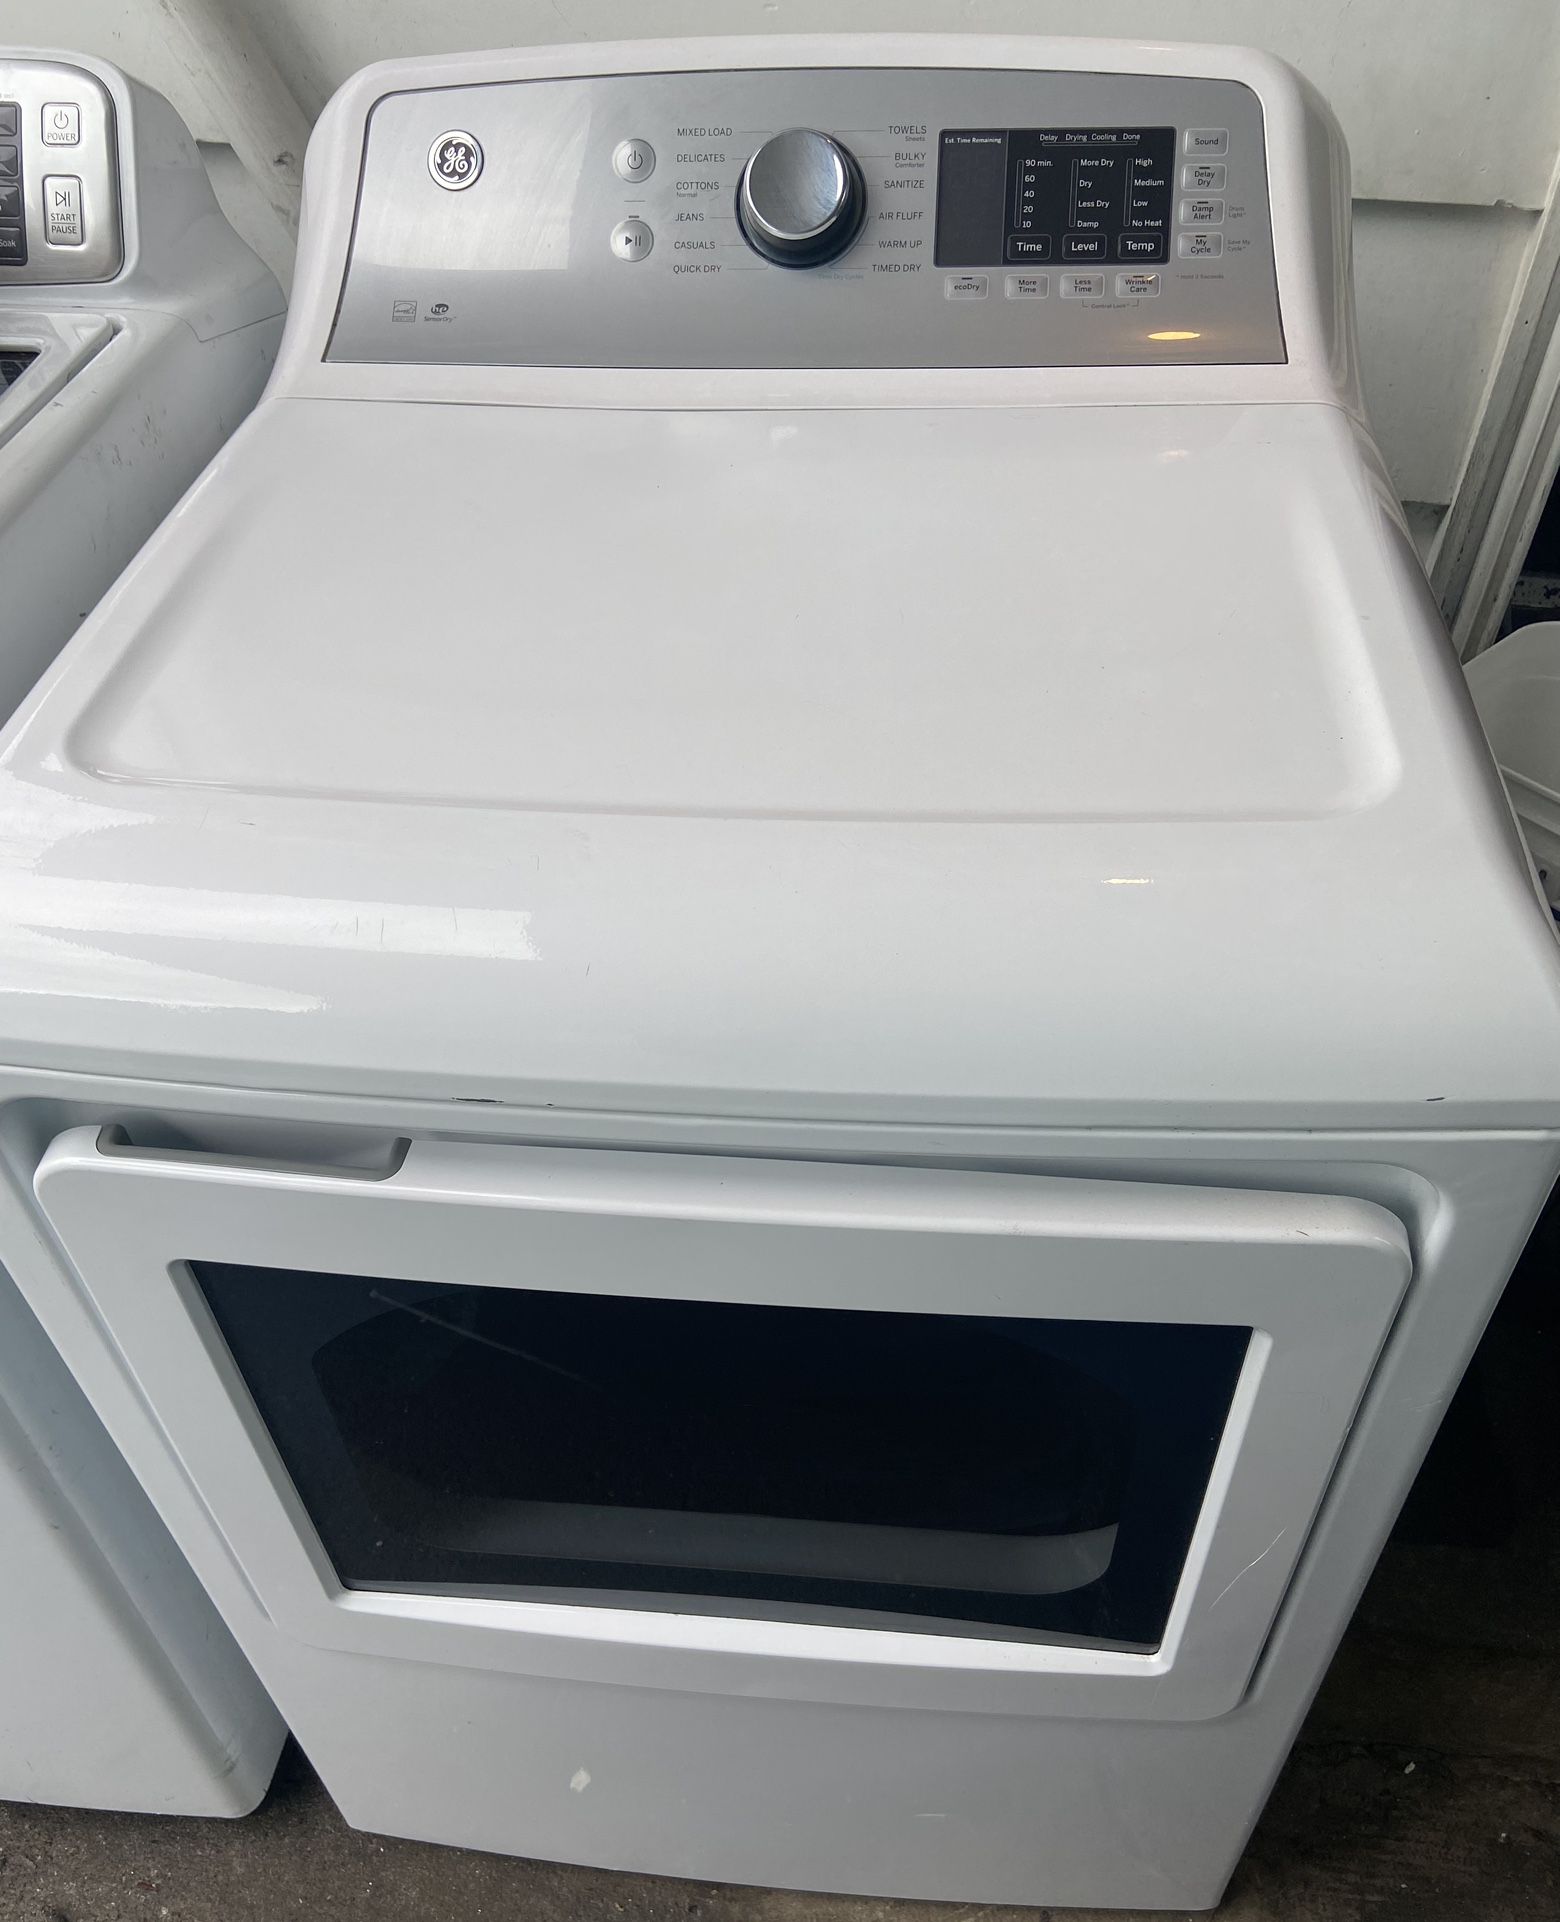 GE XL Capacity Gas Dryer